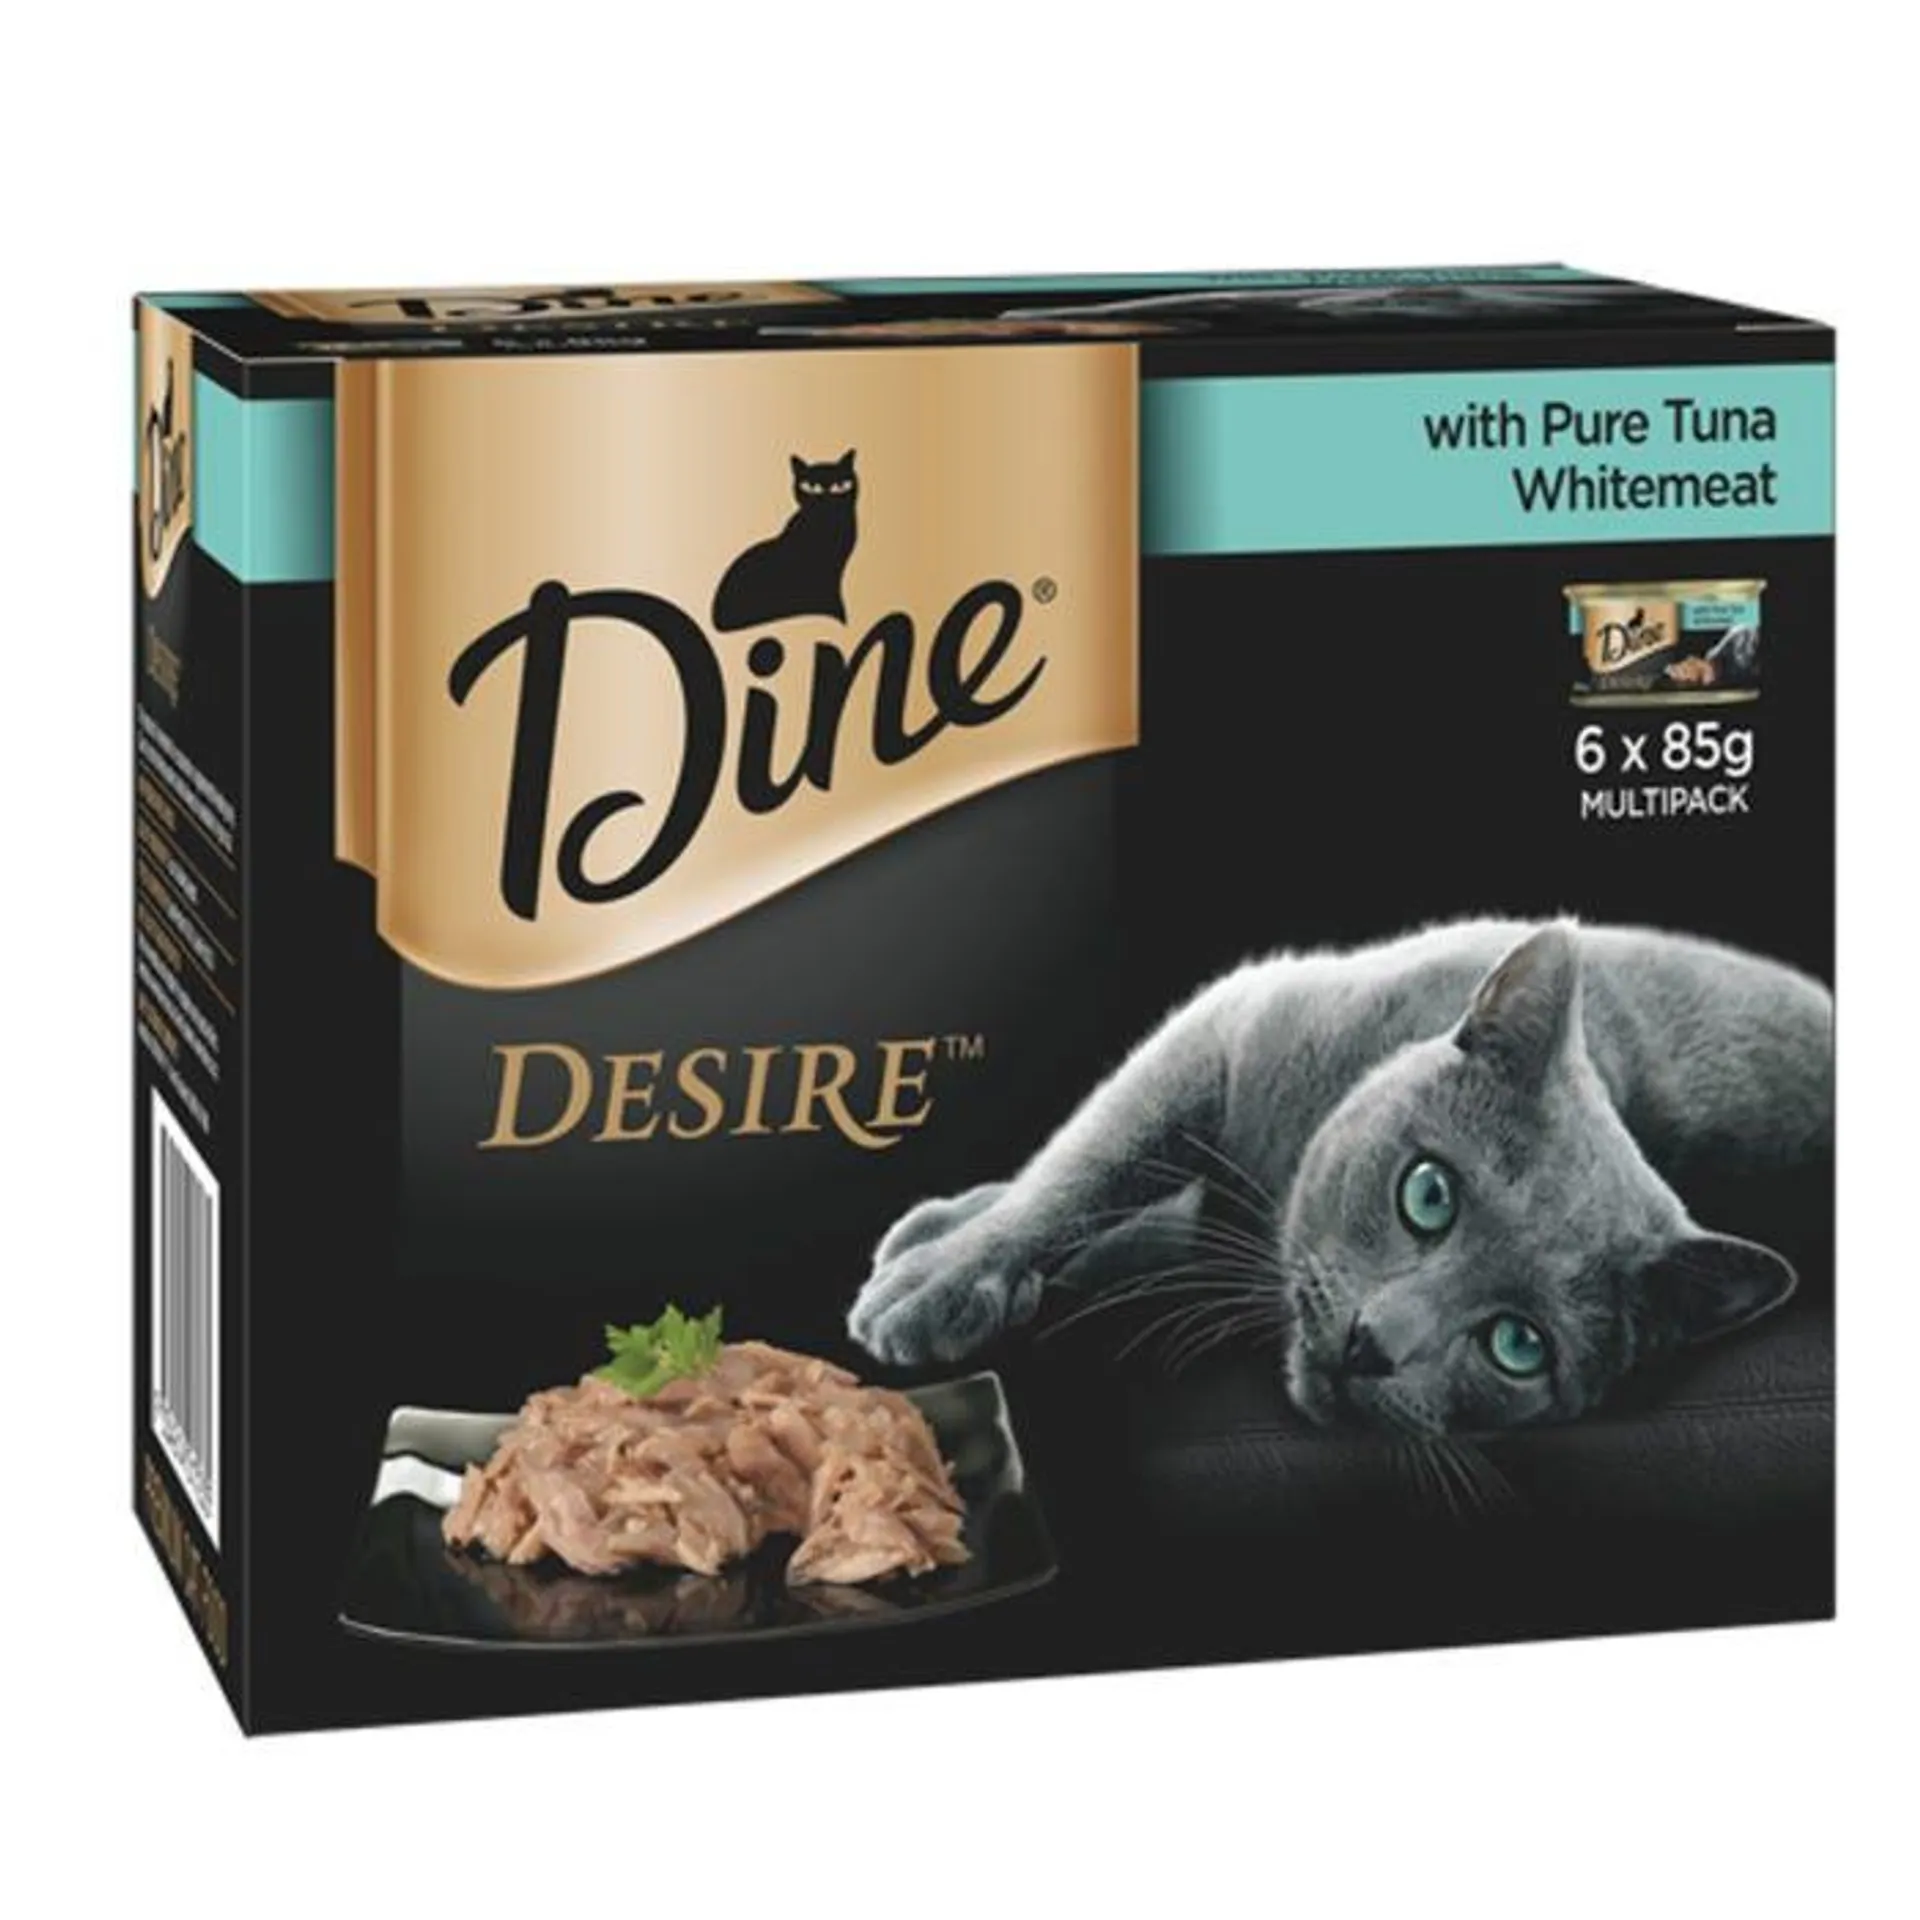 Dine Desire Pure Tuna Whitemeat Pack Cat Food 6 X 85g